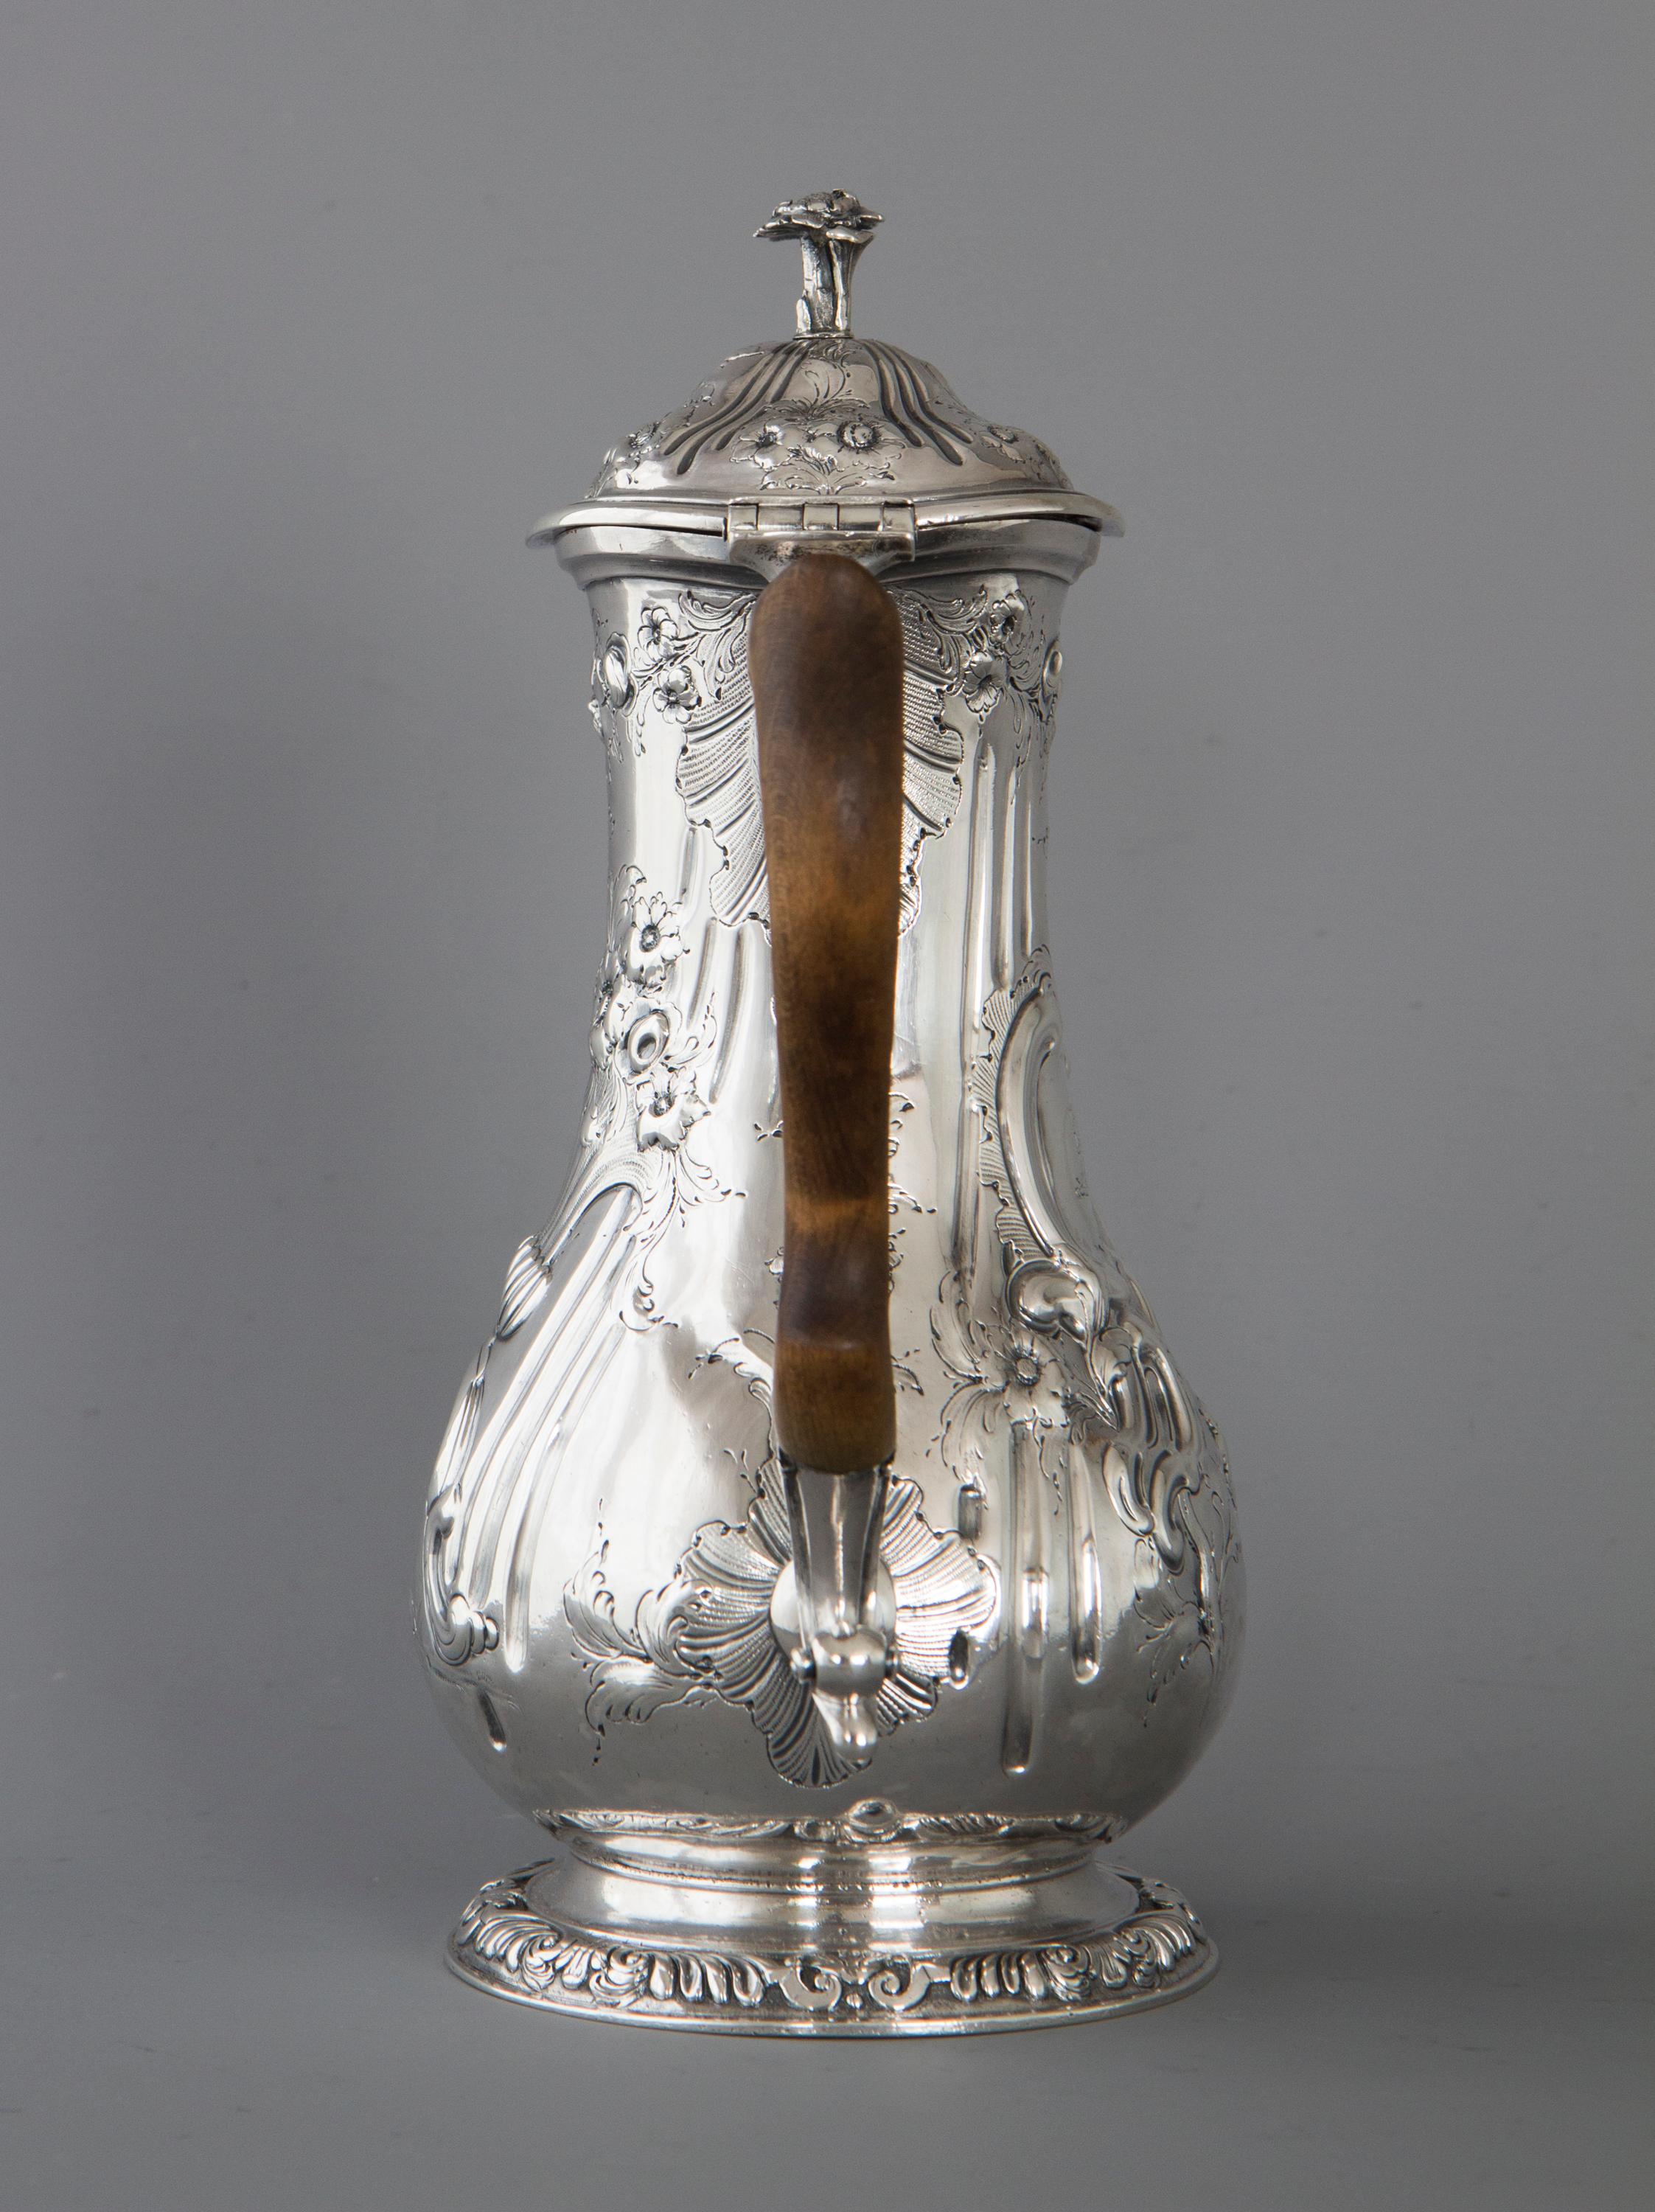 George III Georgian Silver Coffee Pot, London, 1760 by Herne & Butty